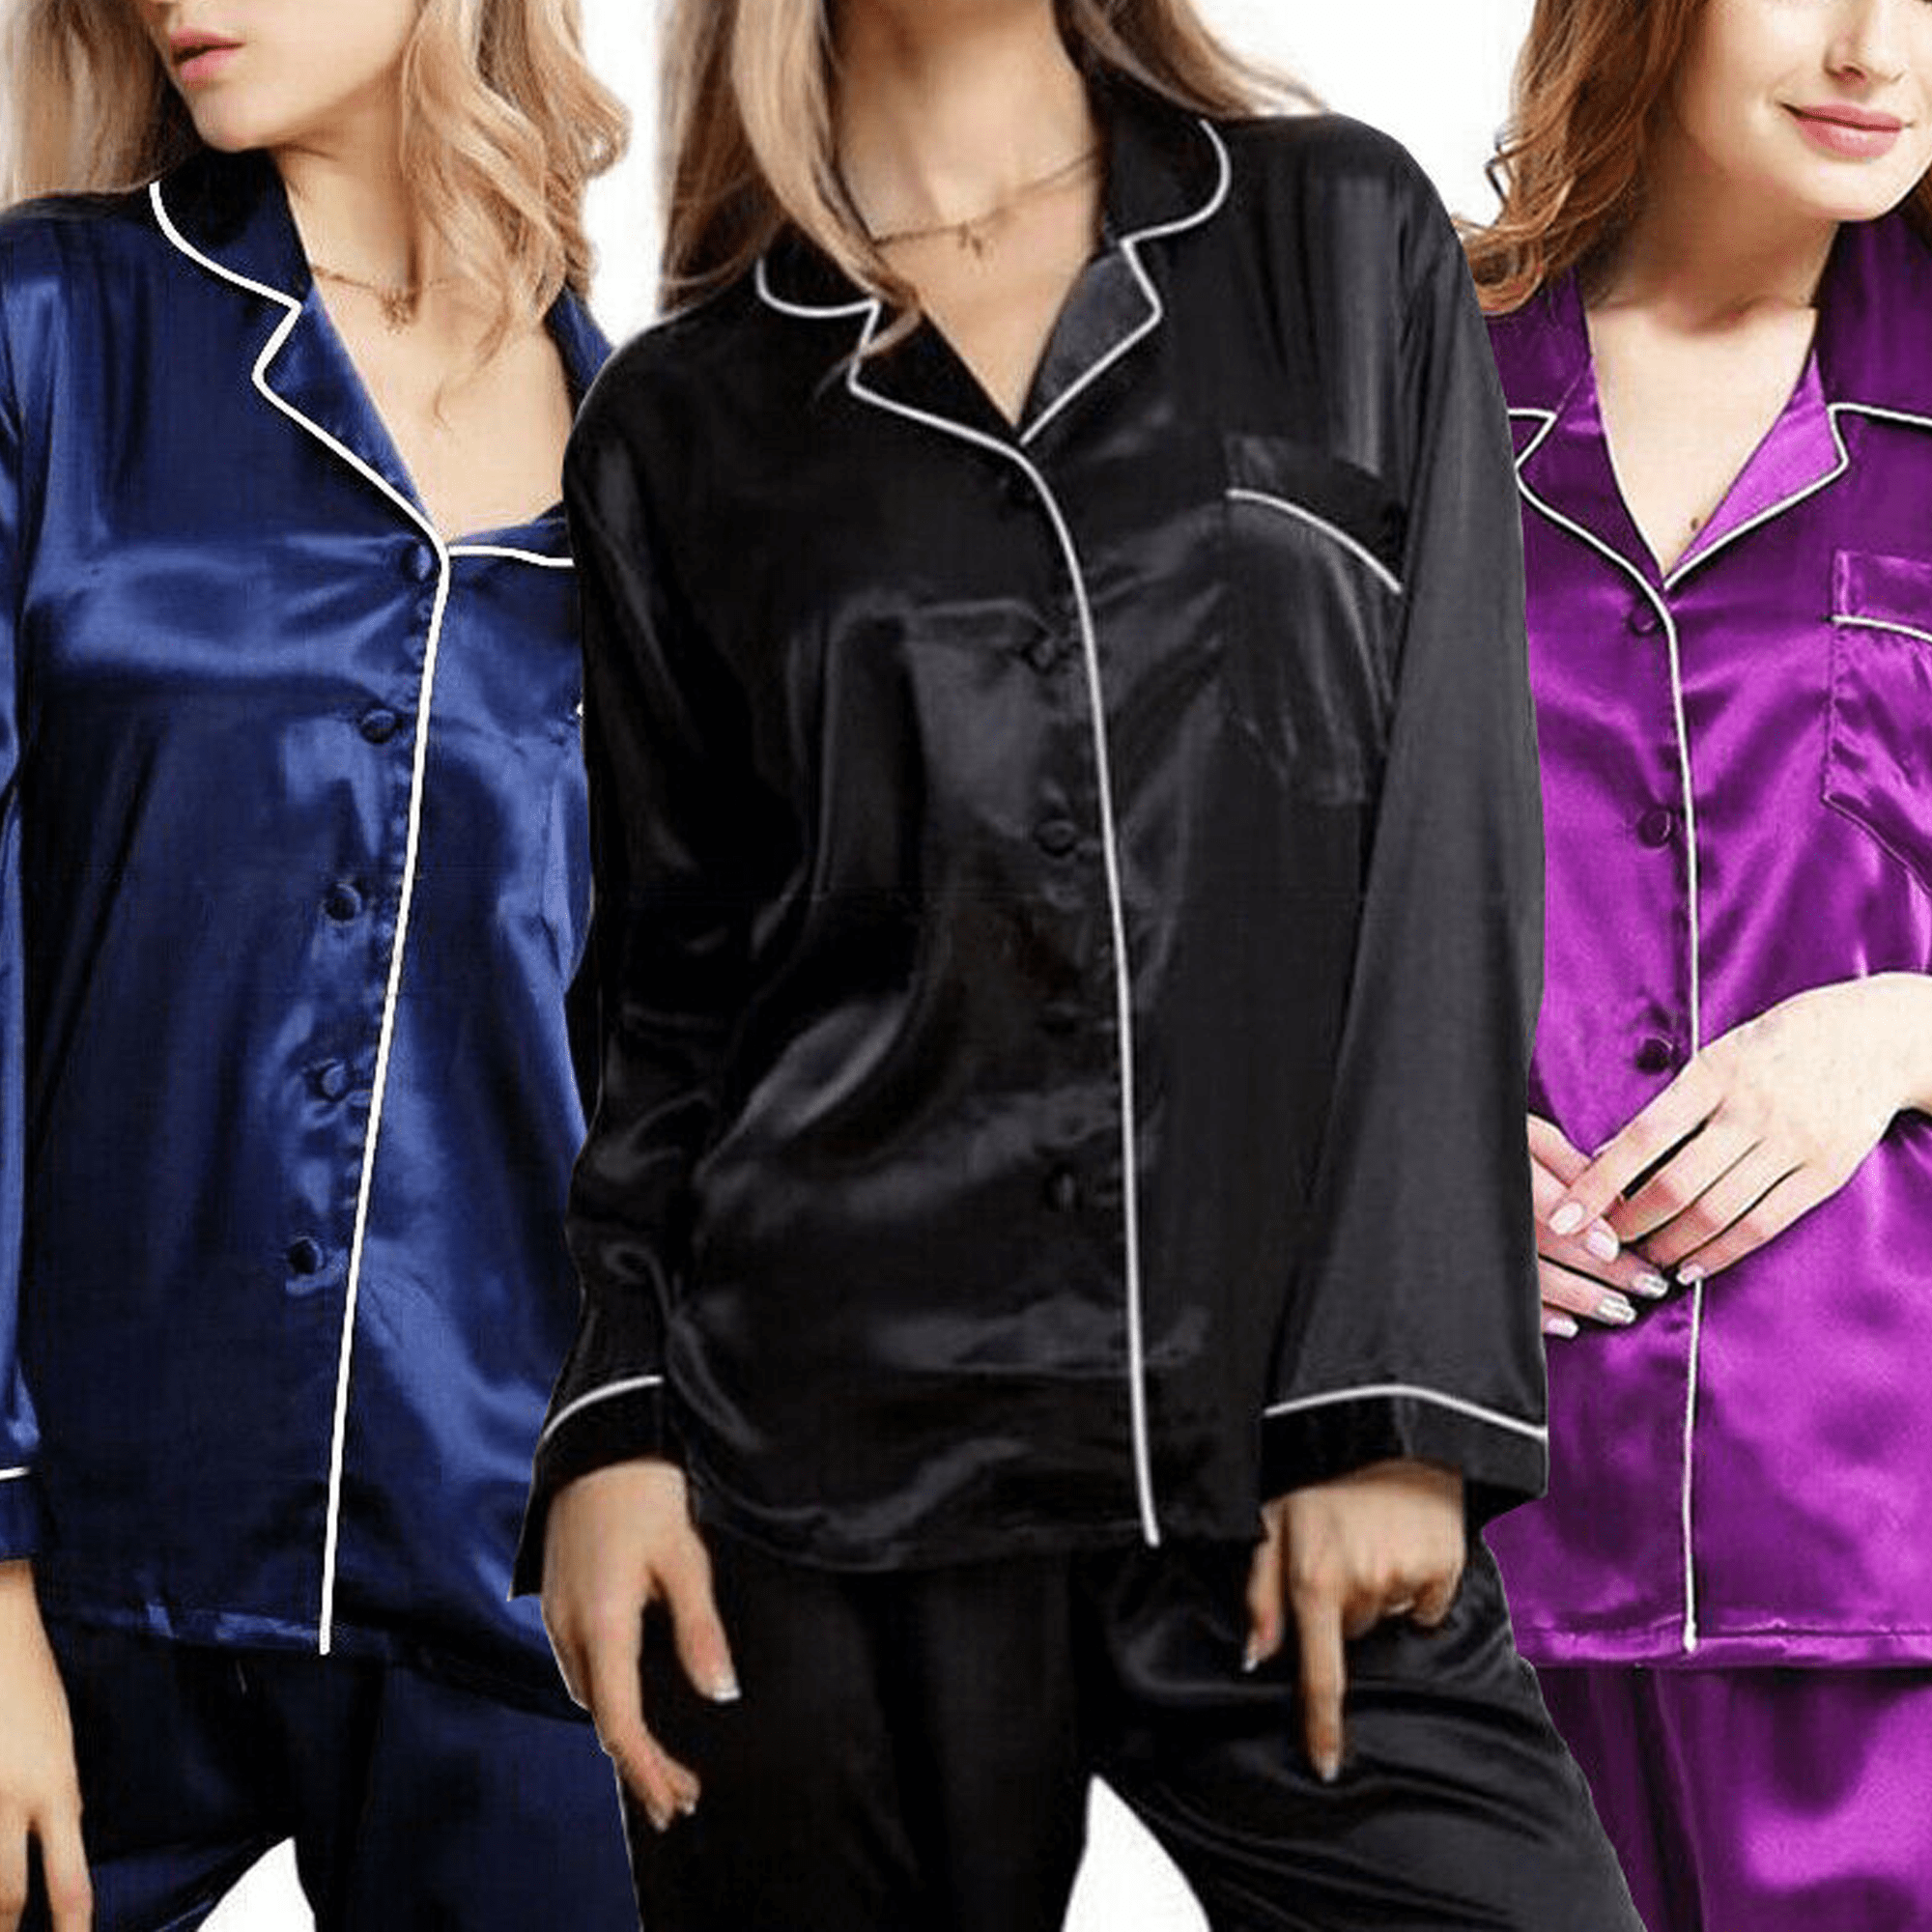 AILMY Womens Pajama Set Star Print Long Sleeve Sleepwear Nightwear Soft Pjs Lounge Sets with Pockets